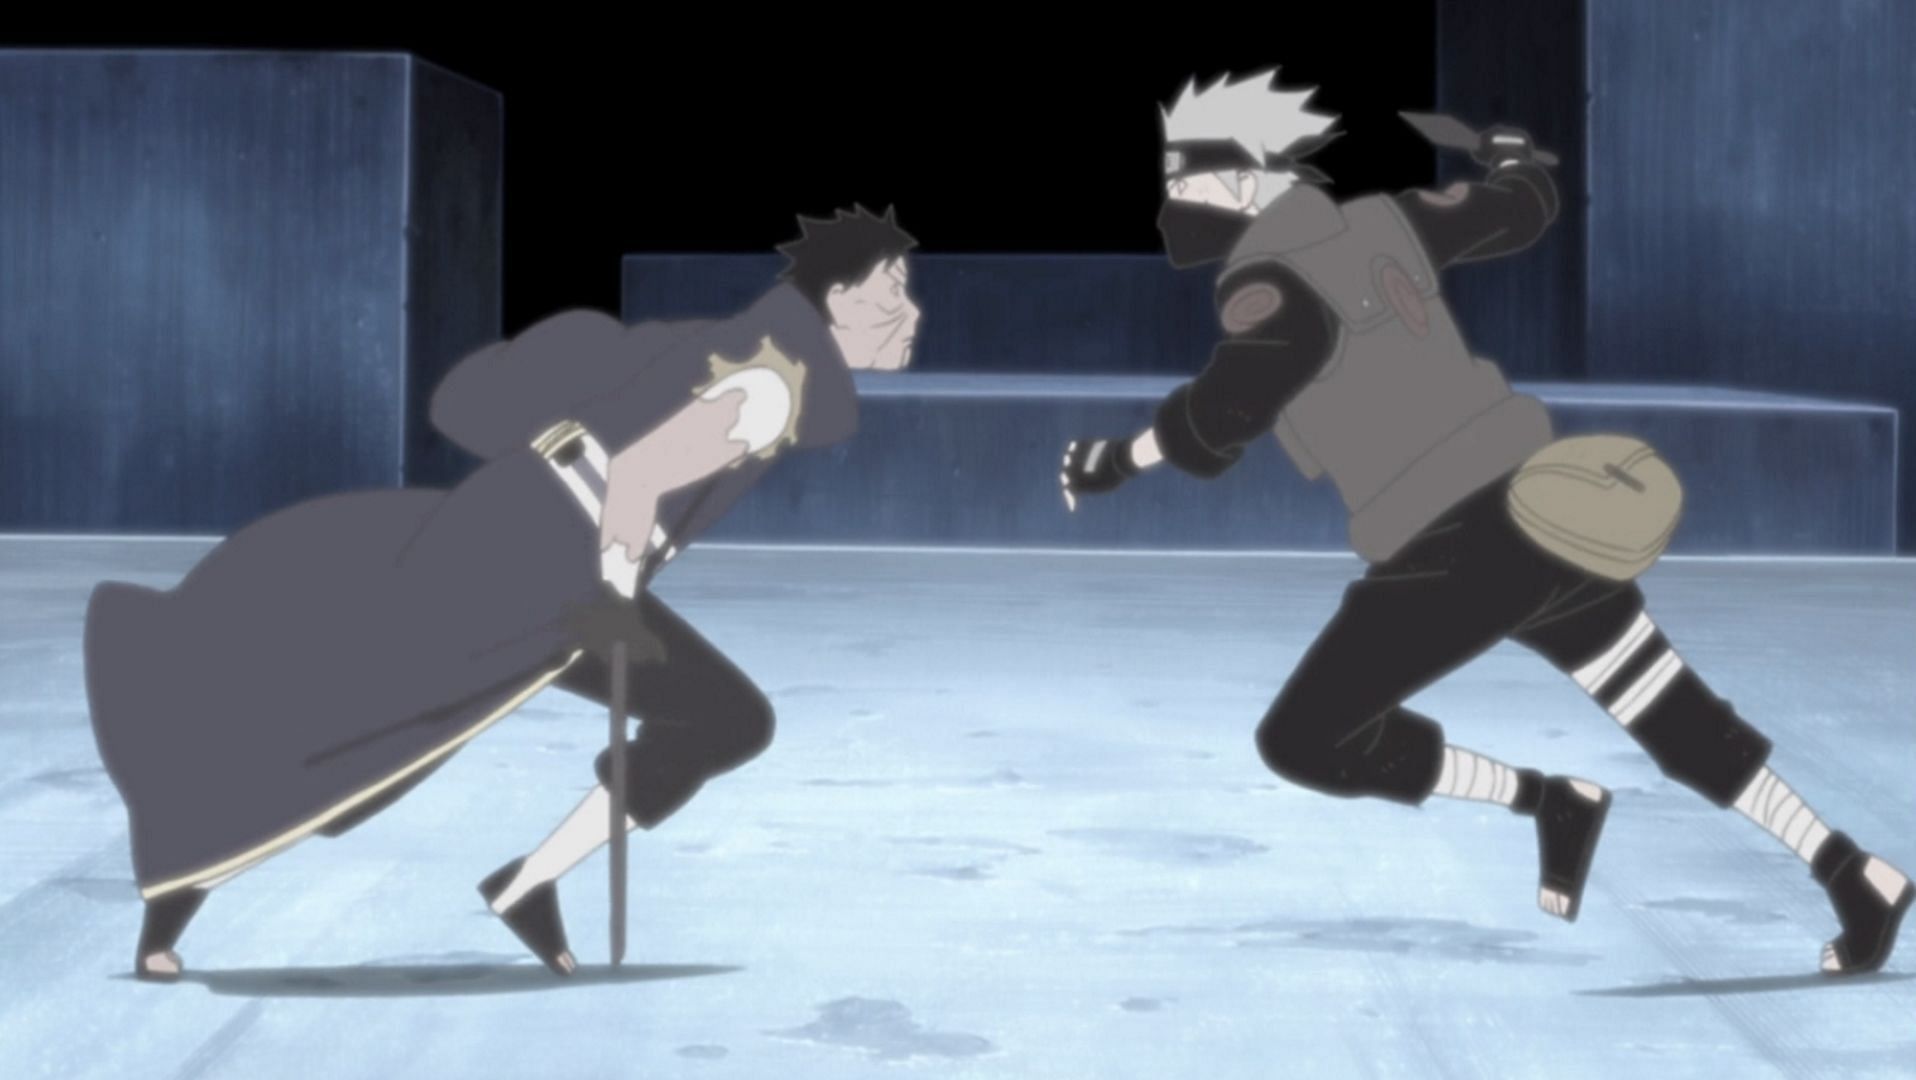 Obito and Kakashi fight in the Kamui dimension (Image via Studio Pierrot)